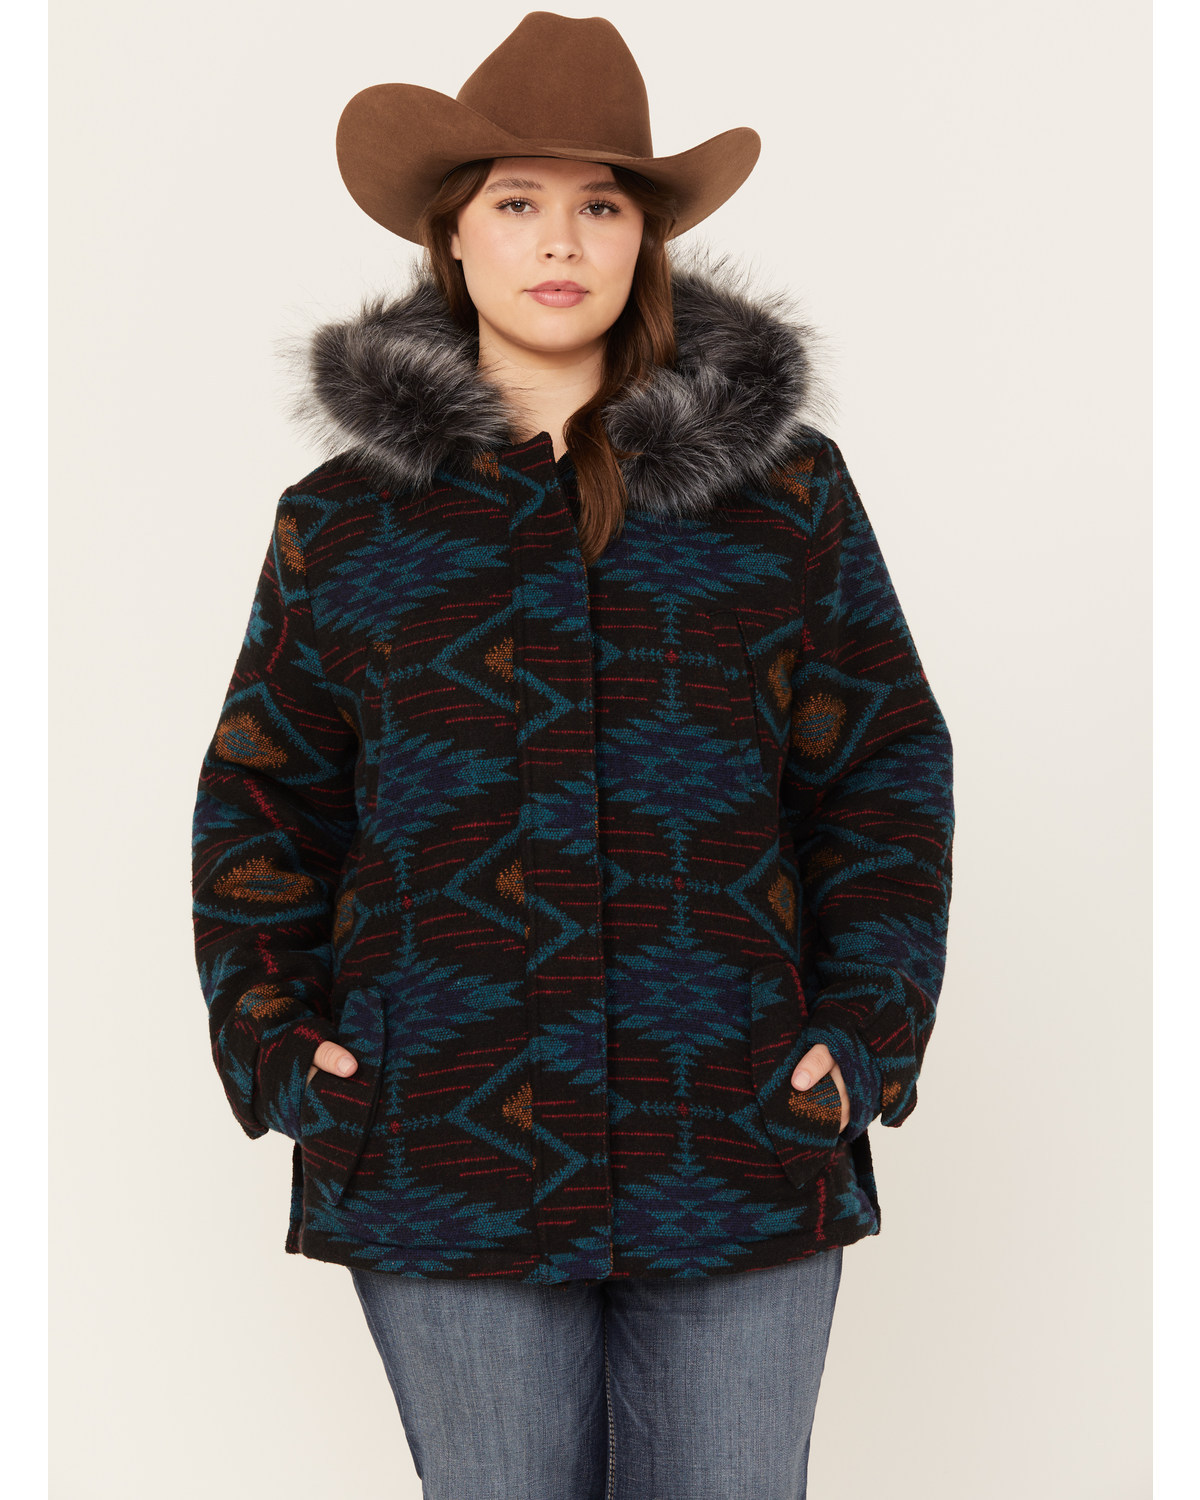 Outback Trading Co. Women's Southwestern Print Faux Fur Myra Coat - Plus